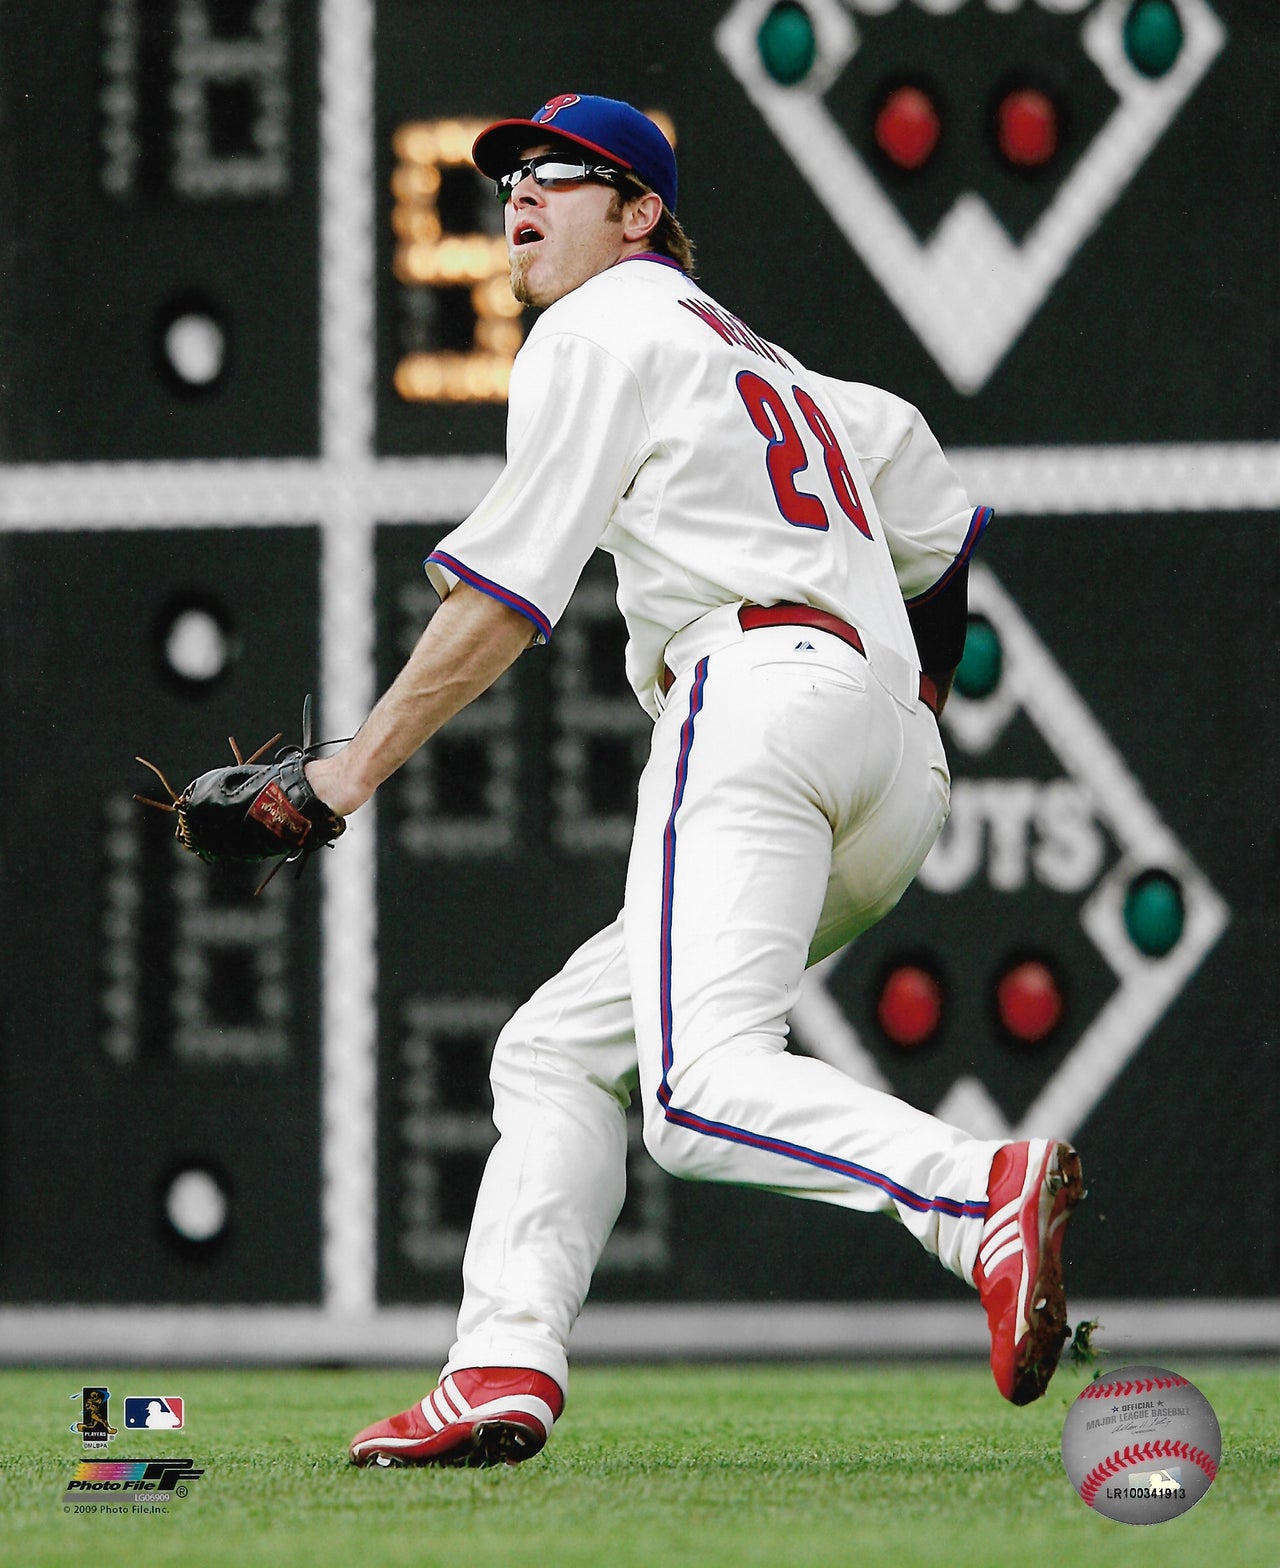 Jayson Werth in Action Philadelphia Phillies 8" x 10" Baseball Photo - Dynasty Sports & Framing 